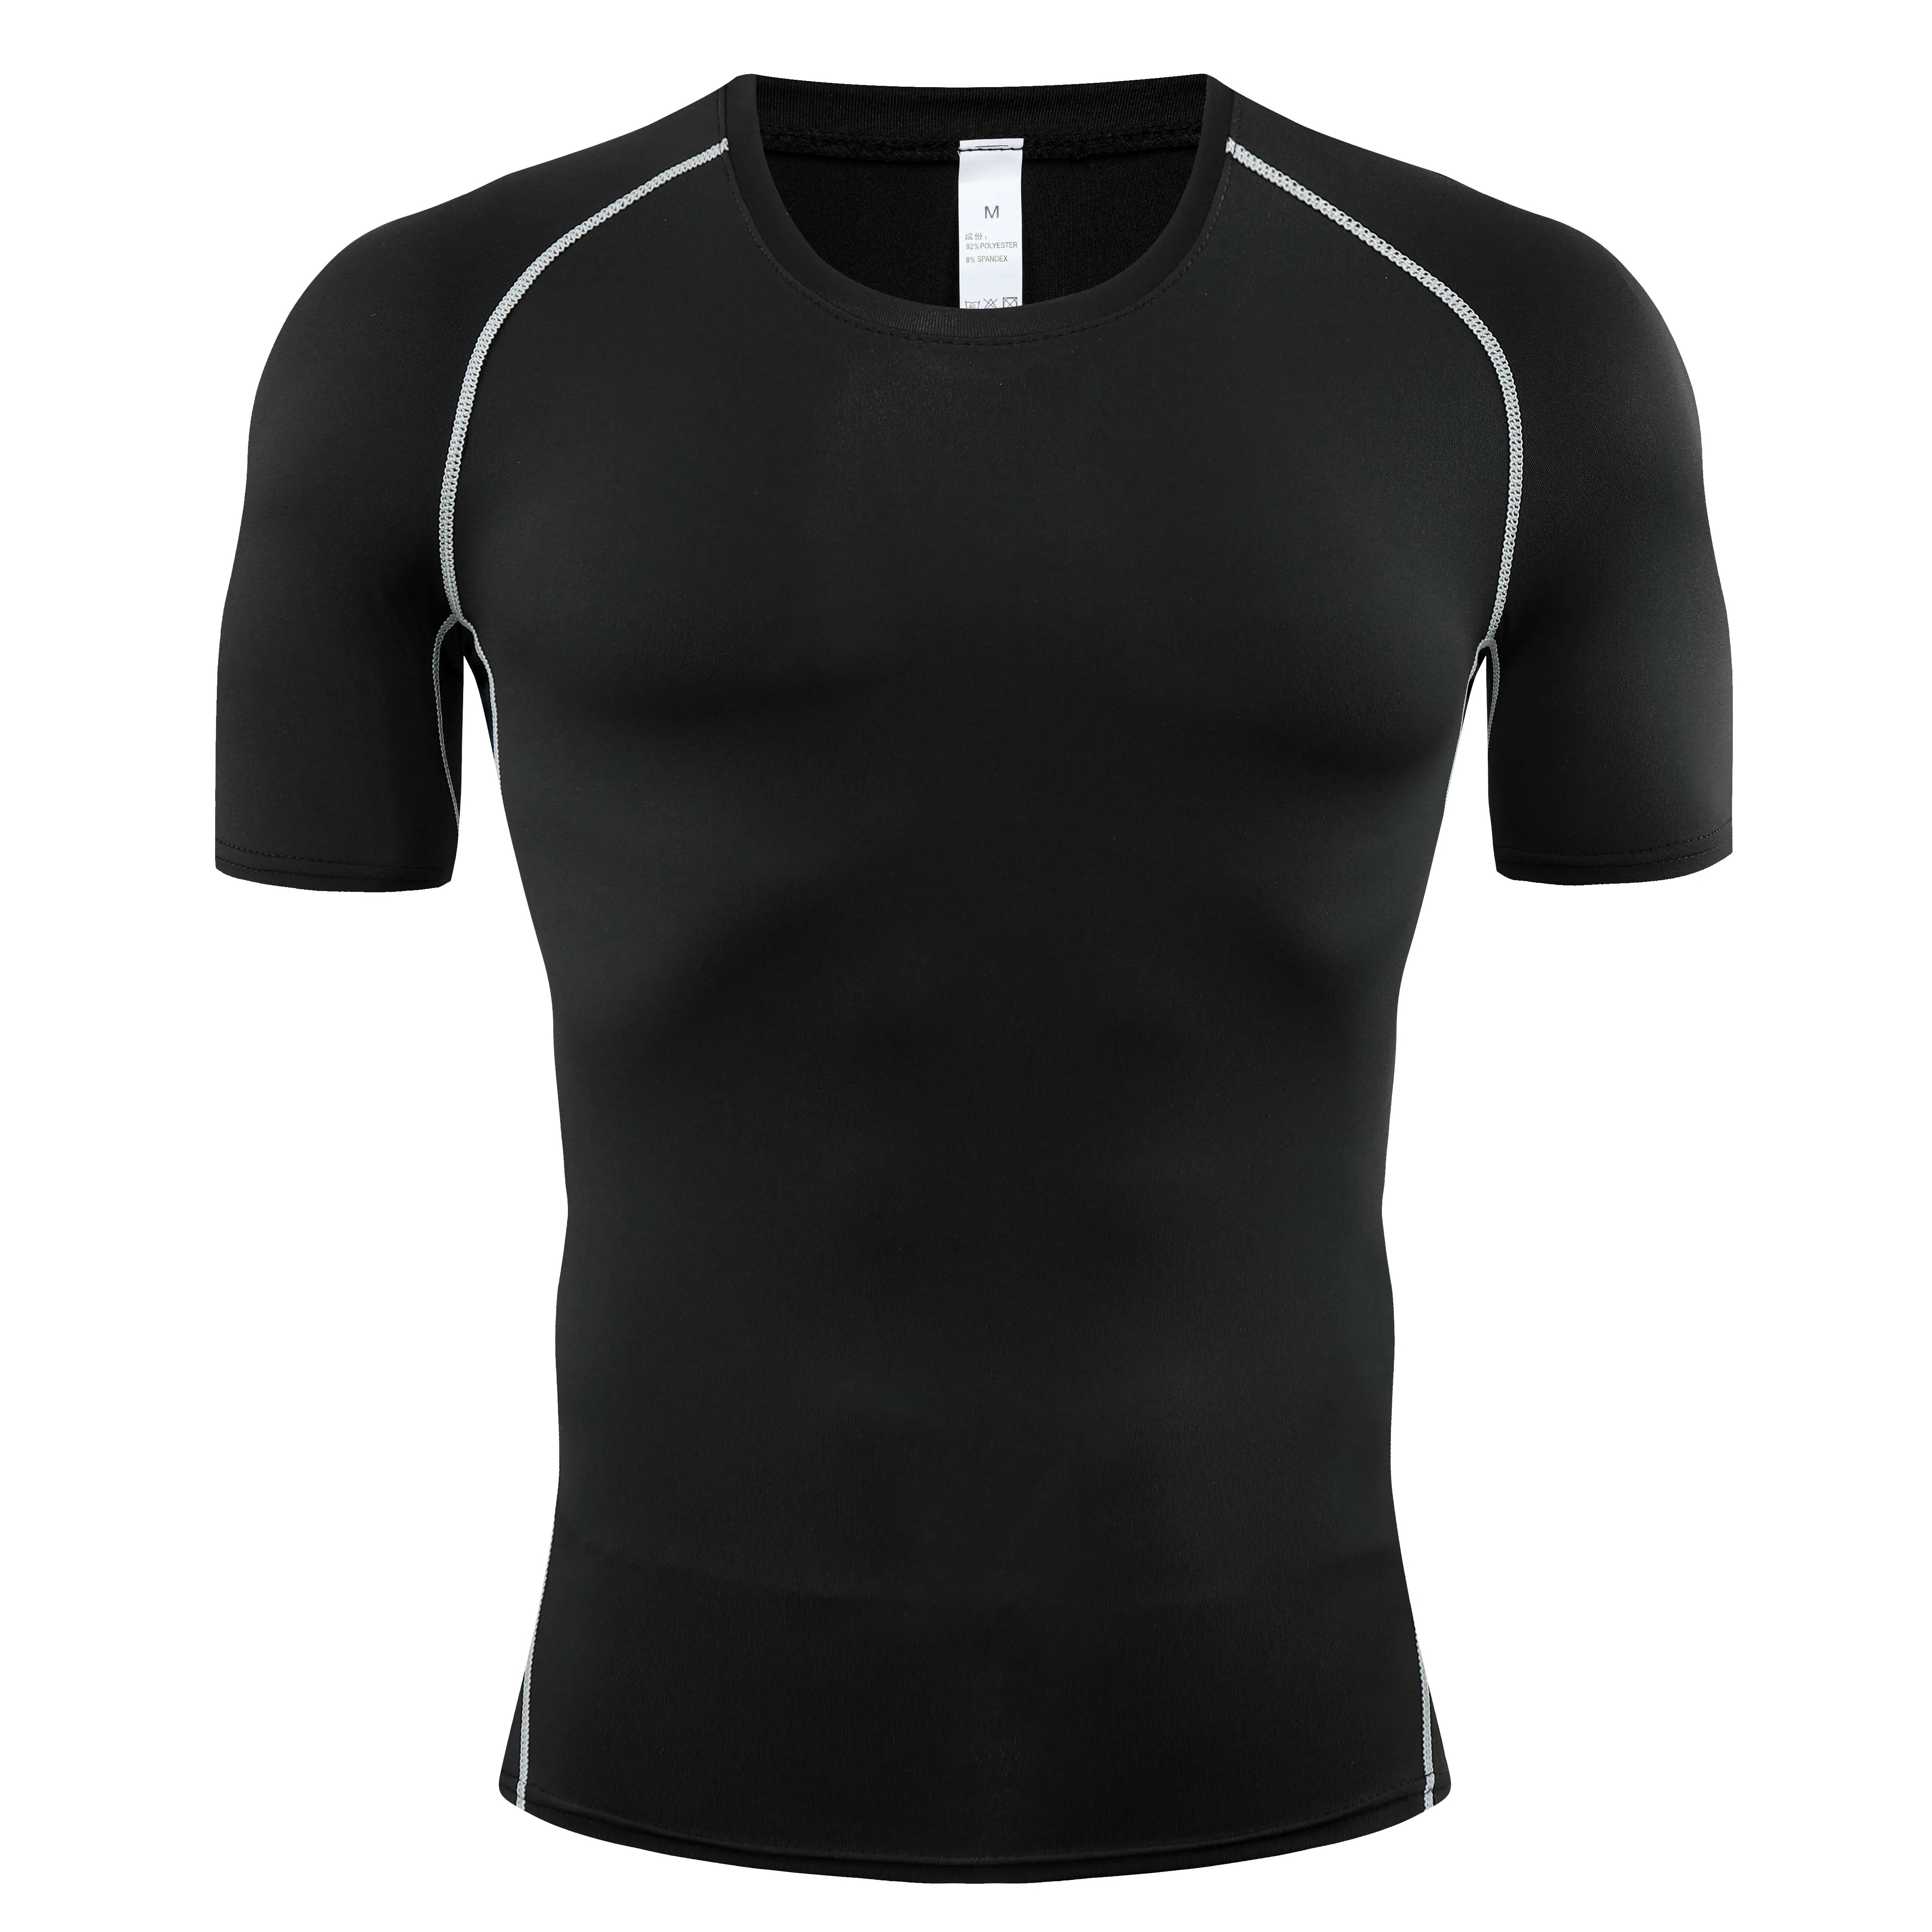 Lidong 남자의 체육관 셔츠 성인을 위한 매끄러운 편안한 폴리에스터 운동복 플러스 사이즈 경량 원활한 통기성